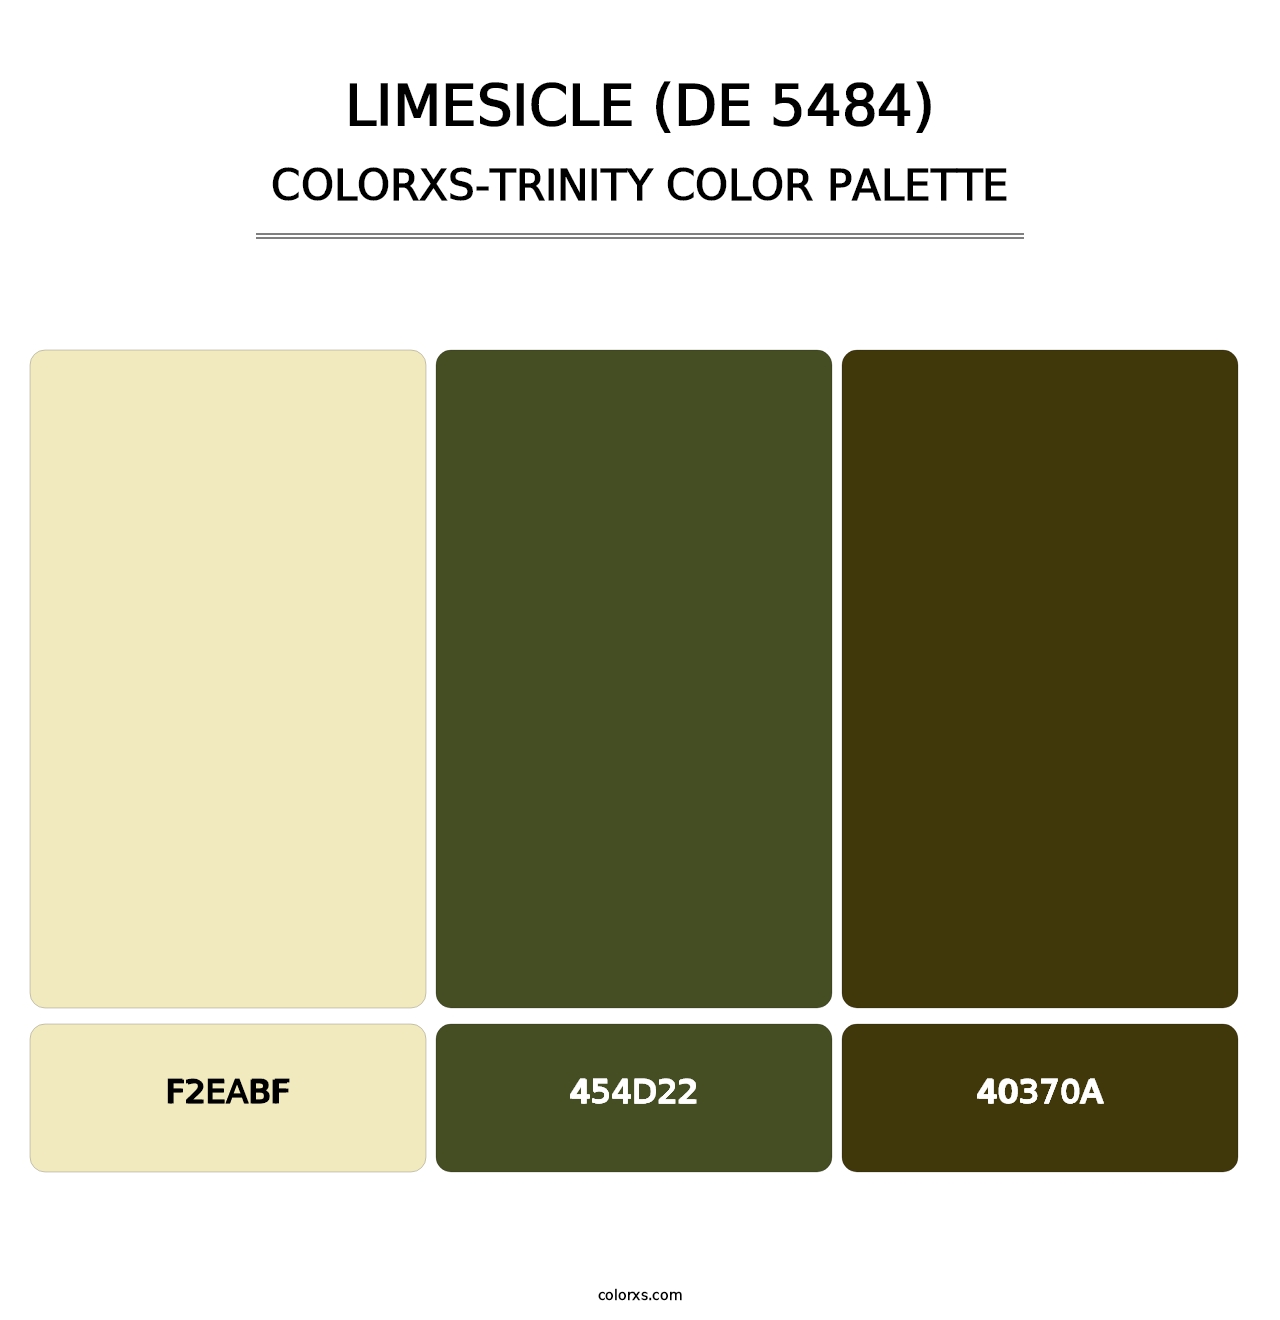 Limesicle (DE 5484) - Colorxs Trinity Palette